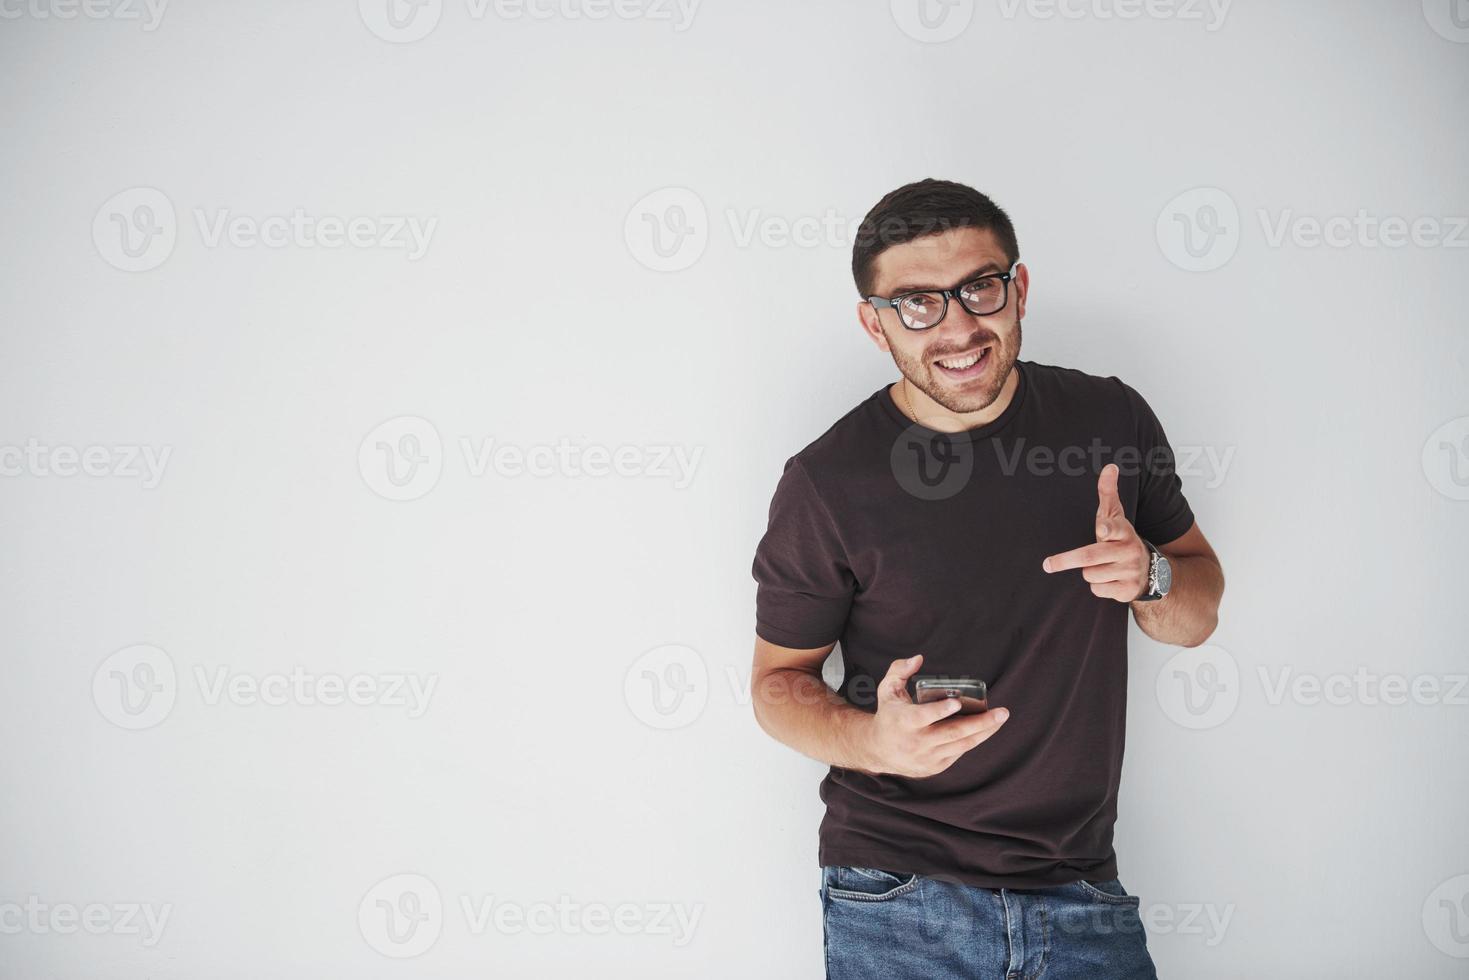 jonge gelukkige man casual gekleed met slimme telefoon op witte achtergrond foto